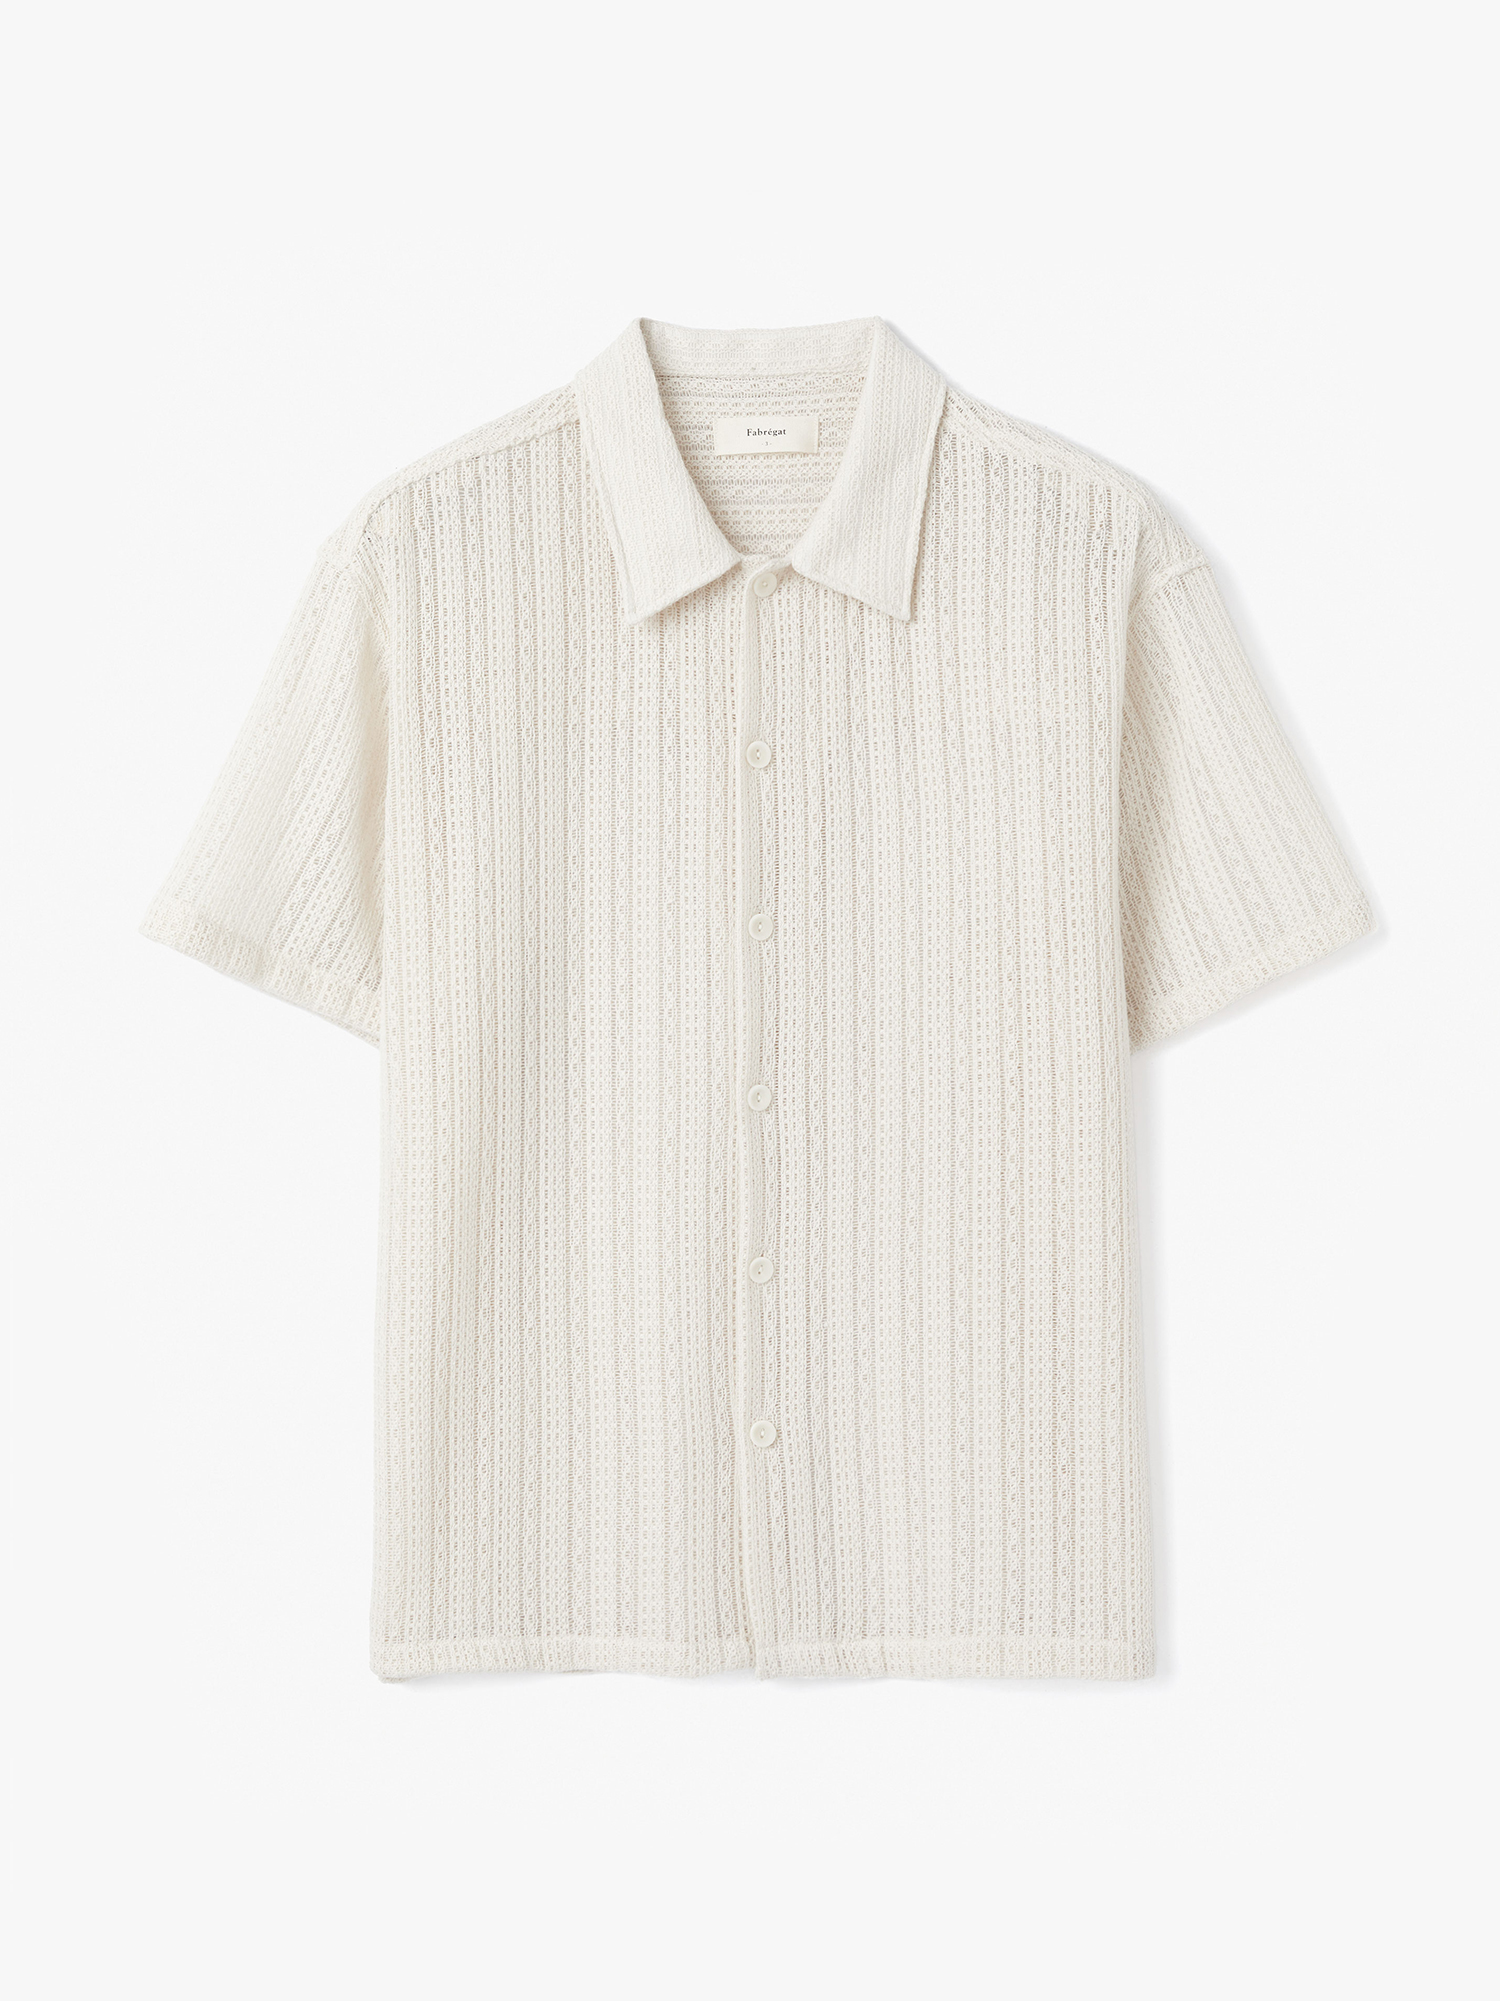 Crua Crochet Half Shirts (Ivory)